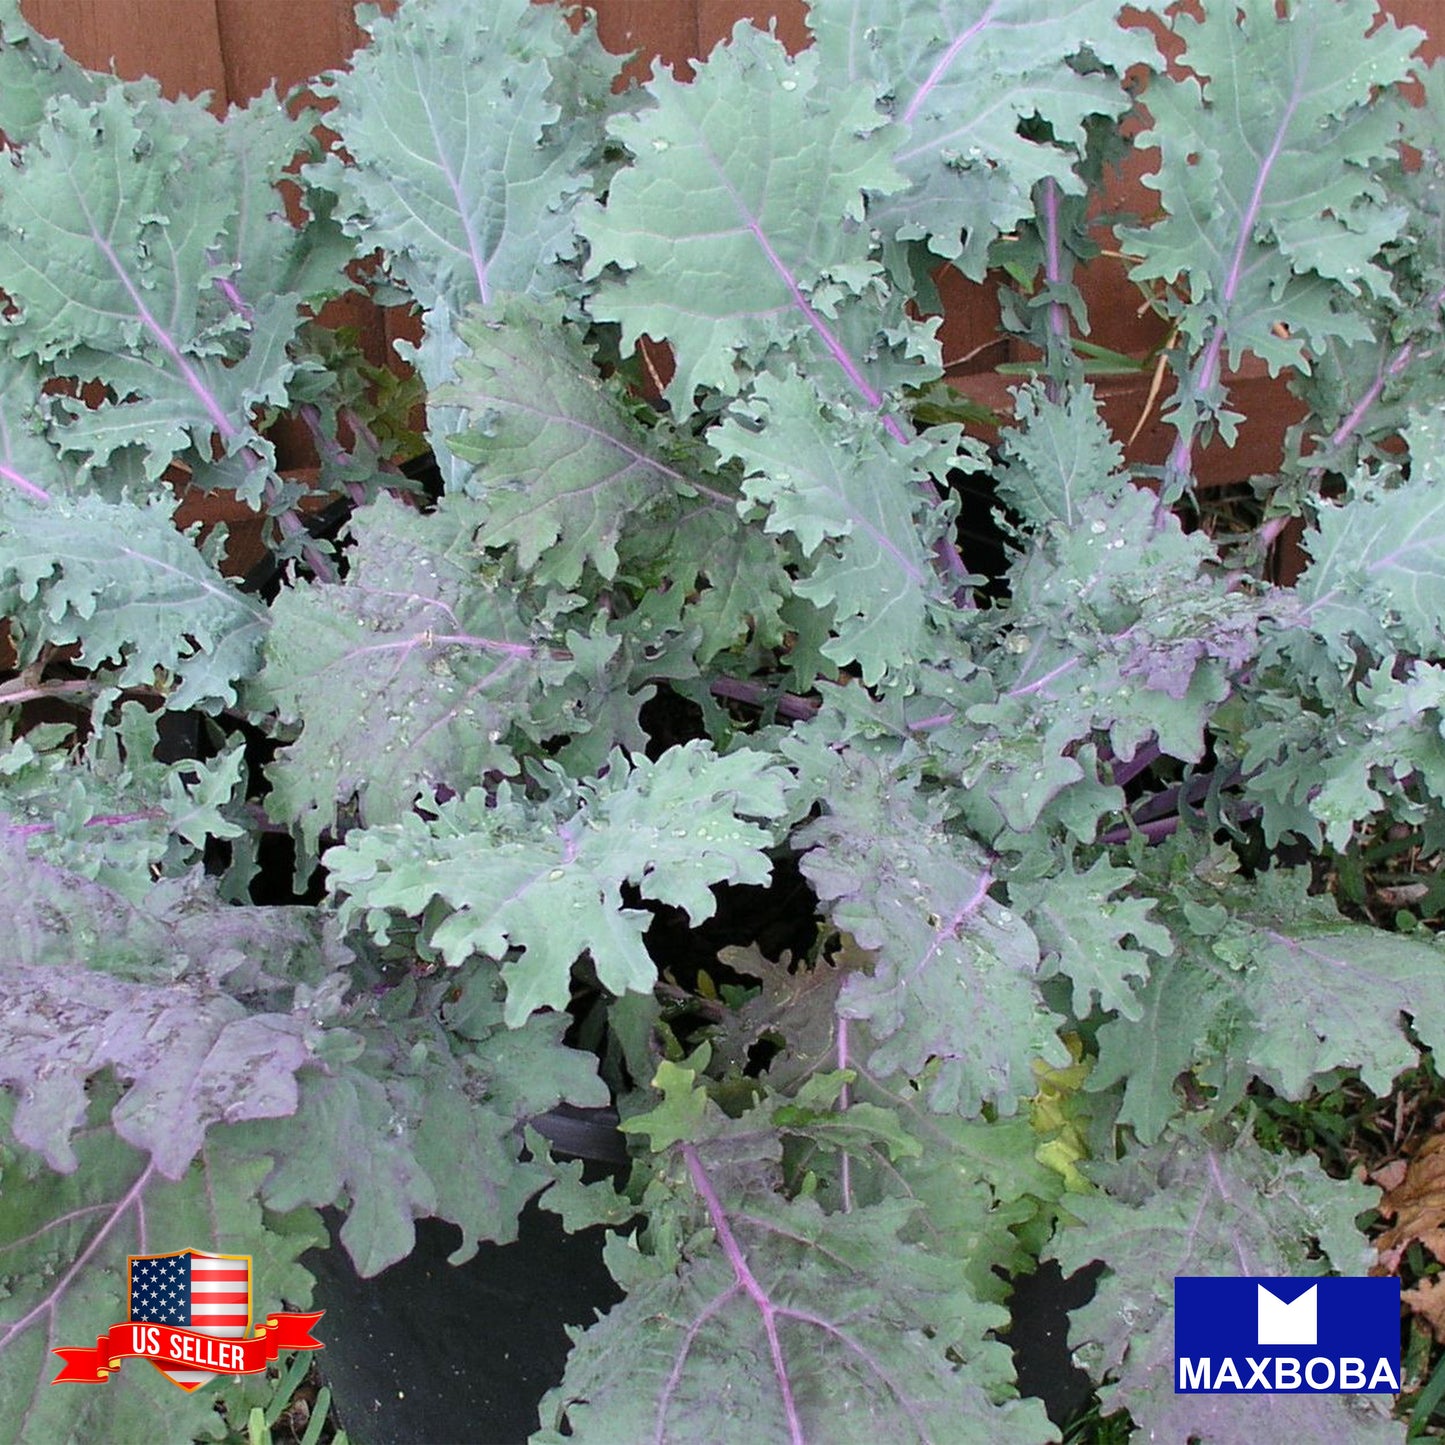 Kale Seeds - Red Russian Non-GMO / Heirloom / Vegetable Garden Fresh